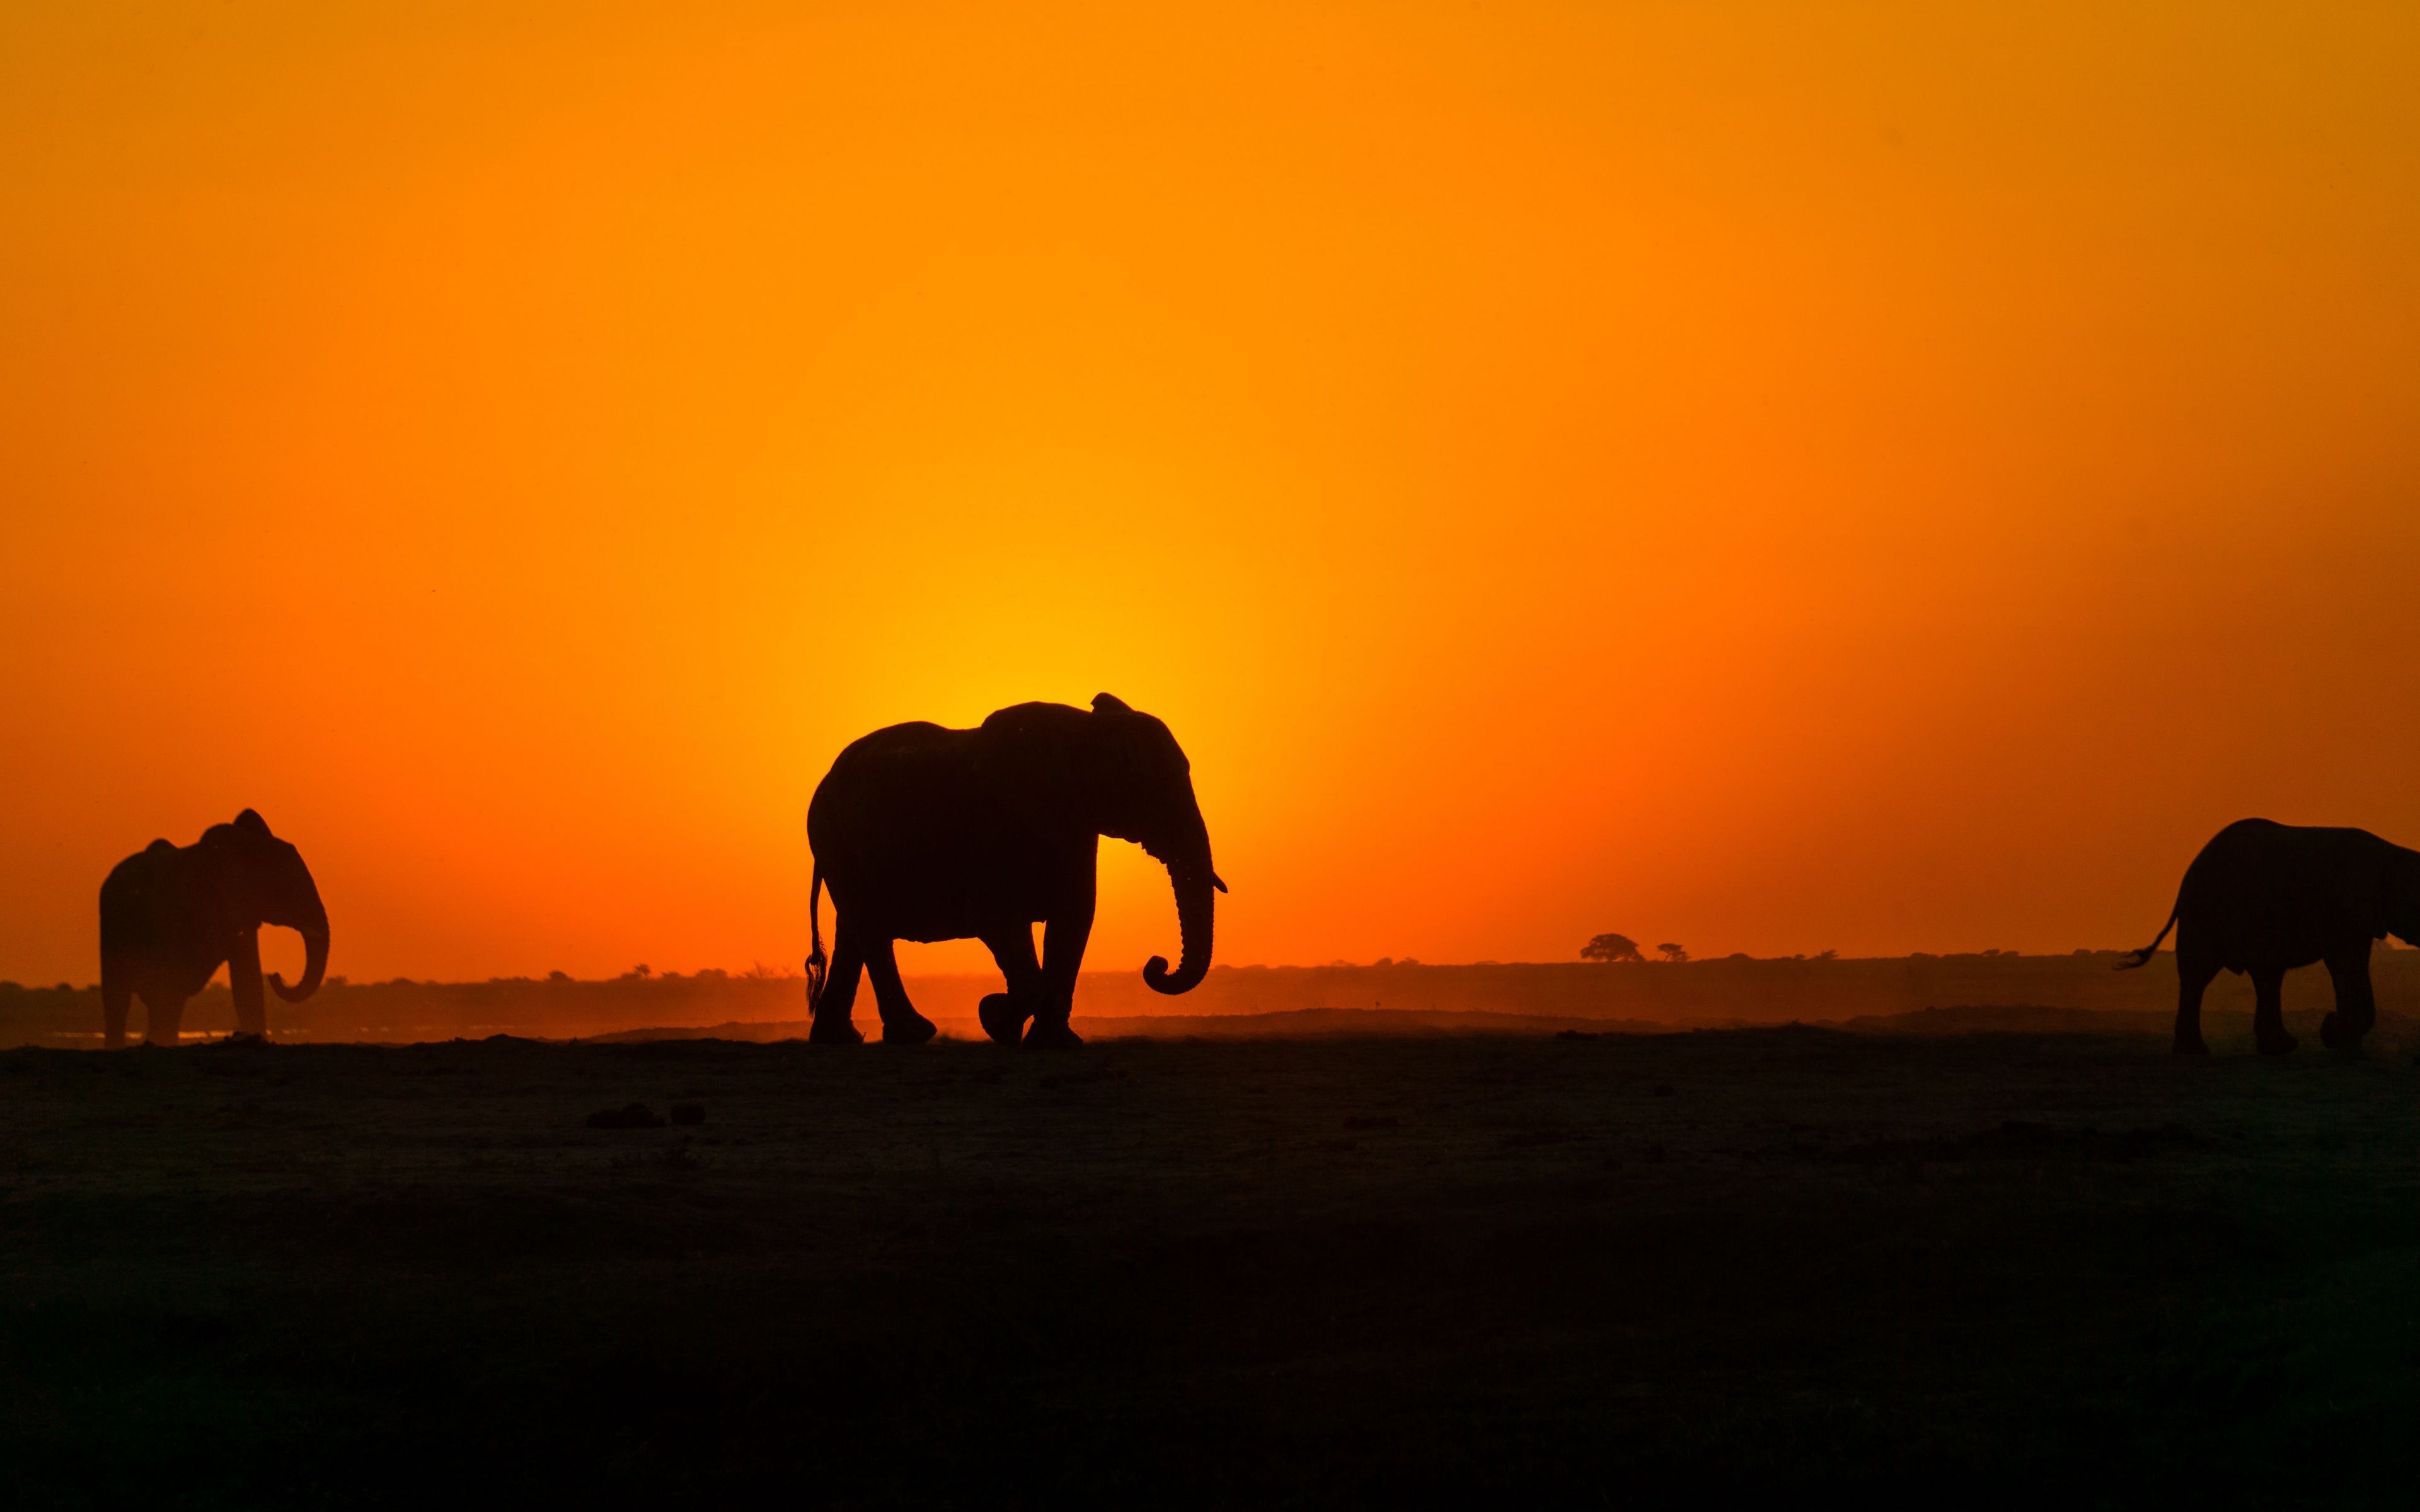 Download wallpaper 3840x2400 elephant, sunset, silhouette, africa 4k ultra HD 16:10 HD background